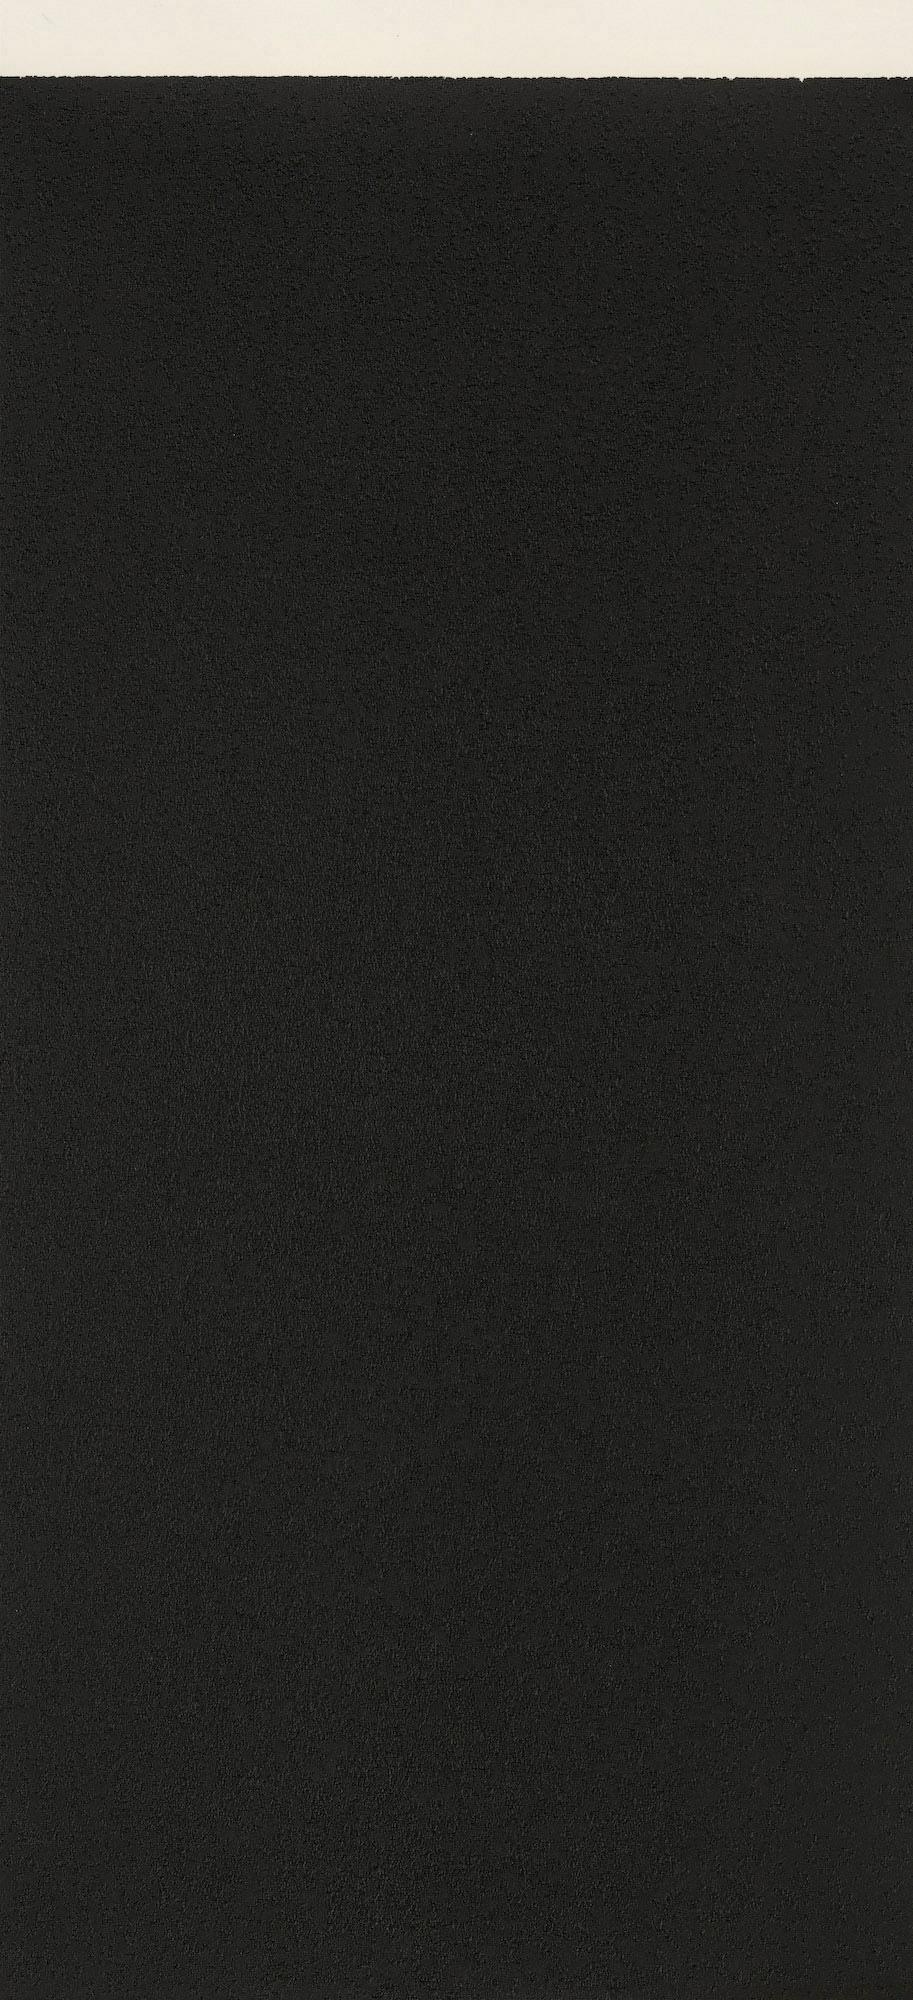 Richard Serra Abstract Print - Ballast I